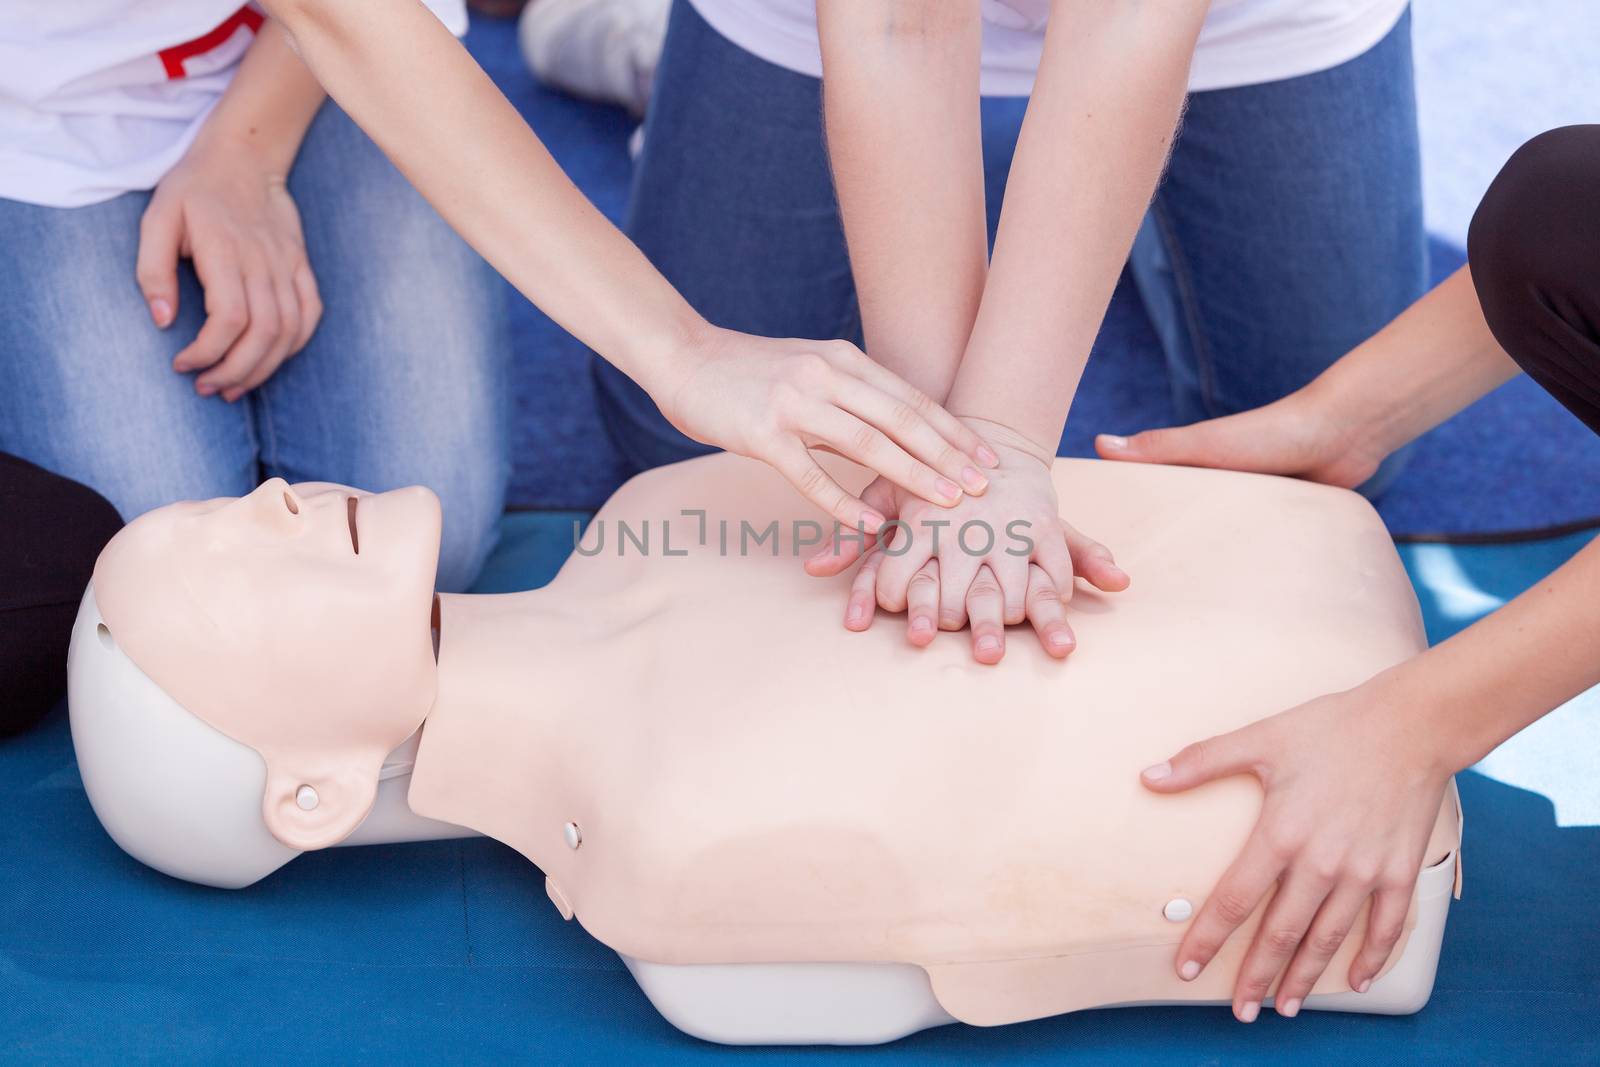 CPR - Cardiopulmonary resuscitation class by wellphoto